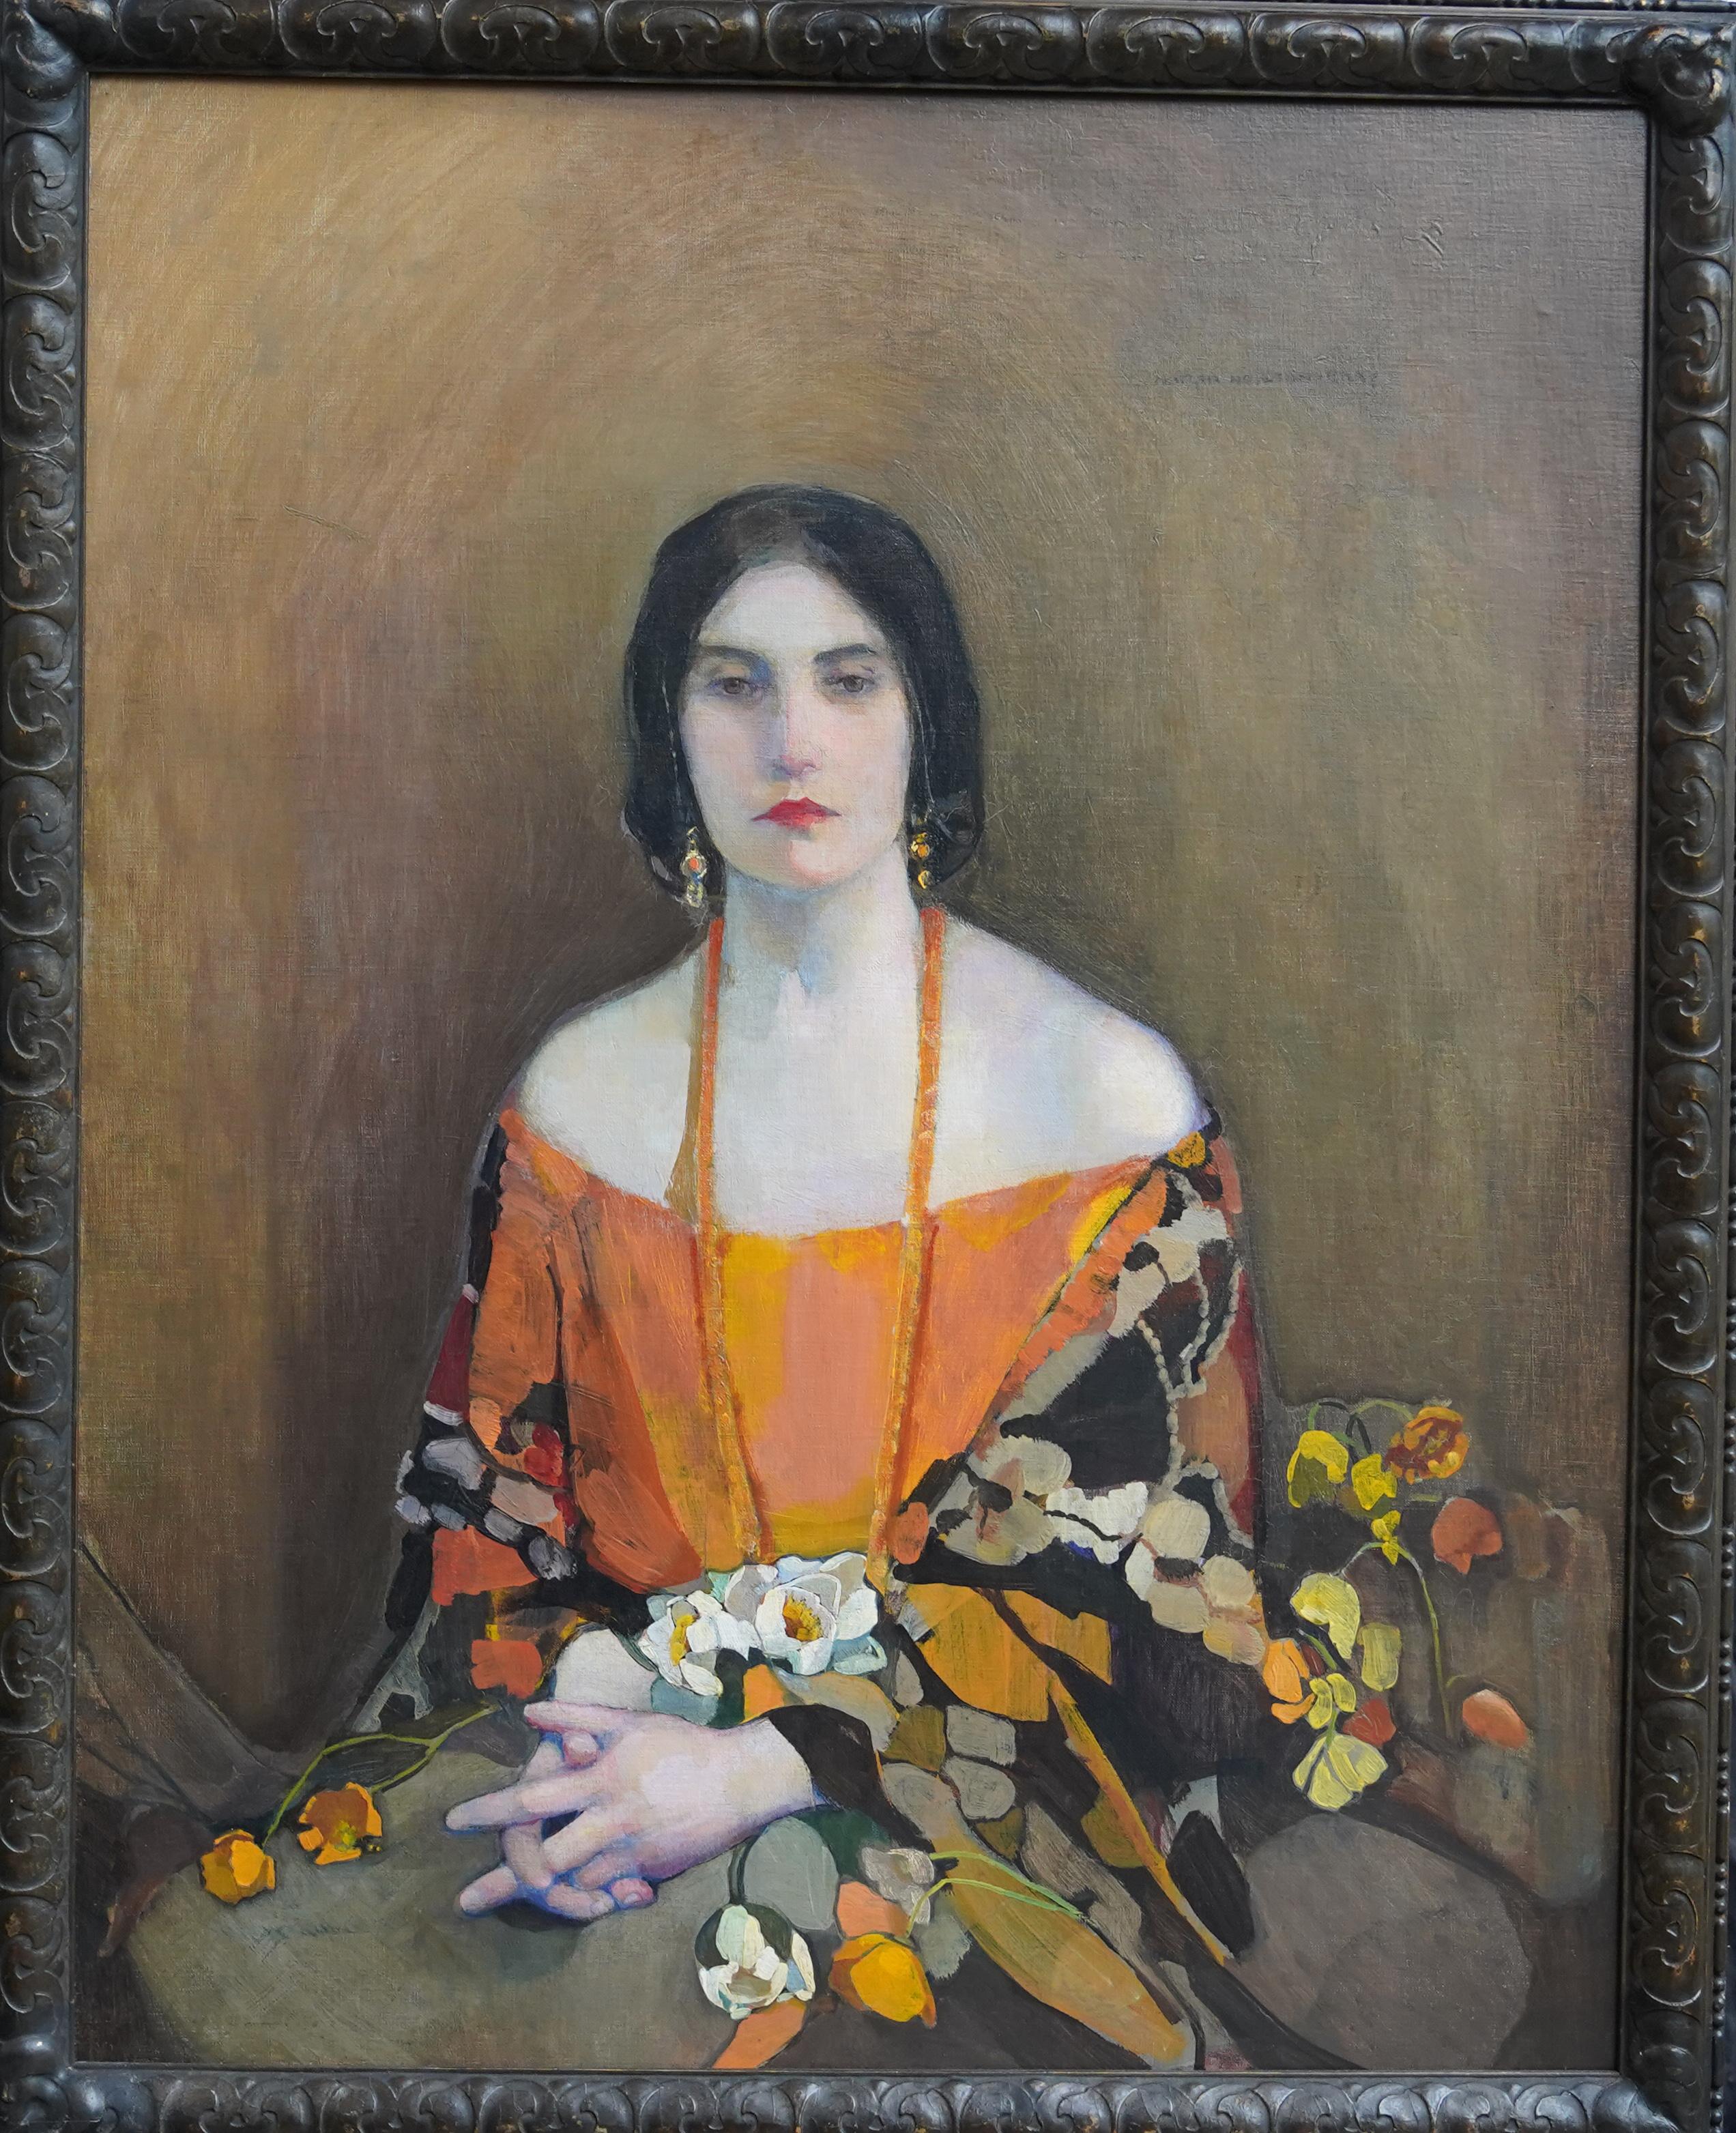 Norah Neilson Gray Portrait Painting - Exotic - Scottish 1920's exhibited 'Glasgow Girl' art portrait oil painting